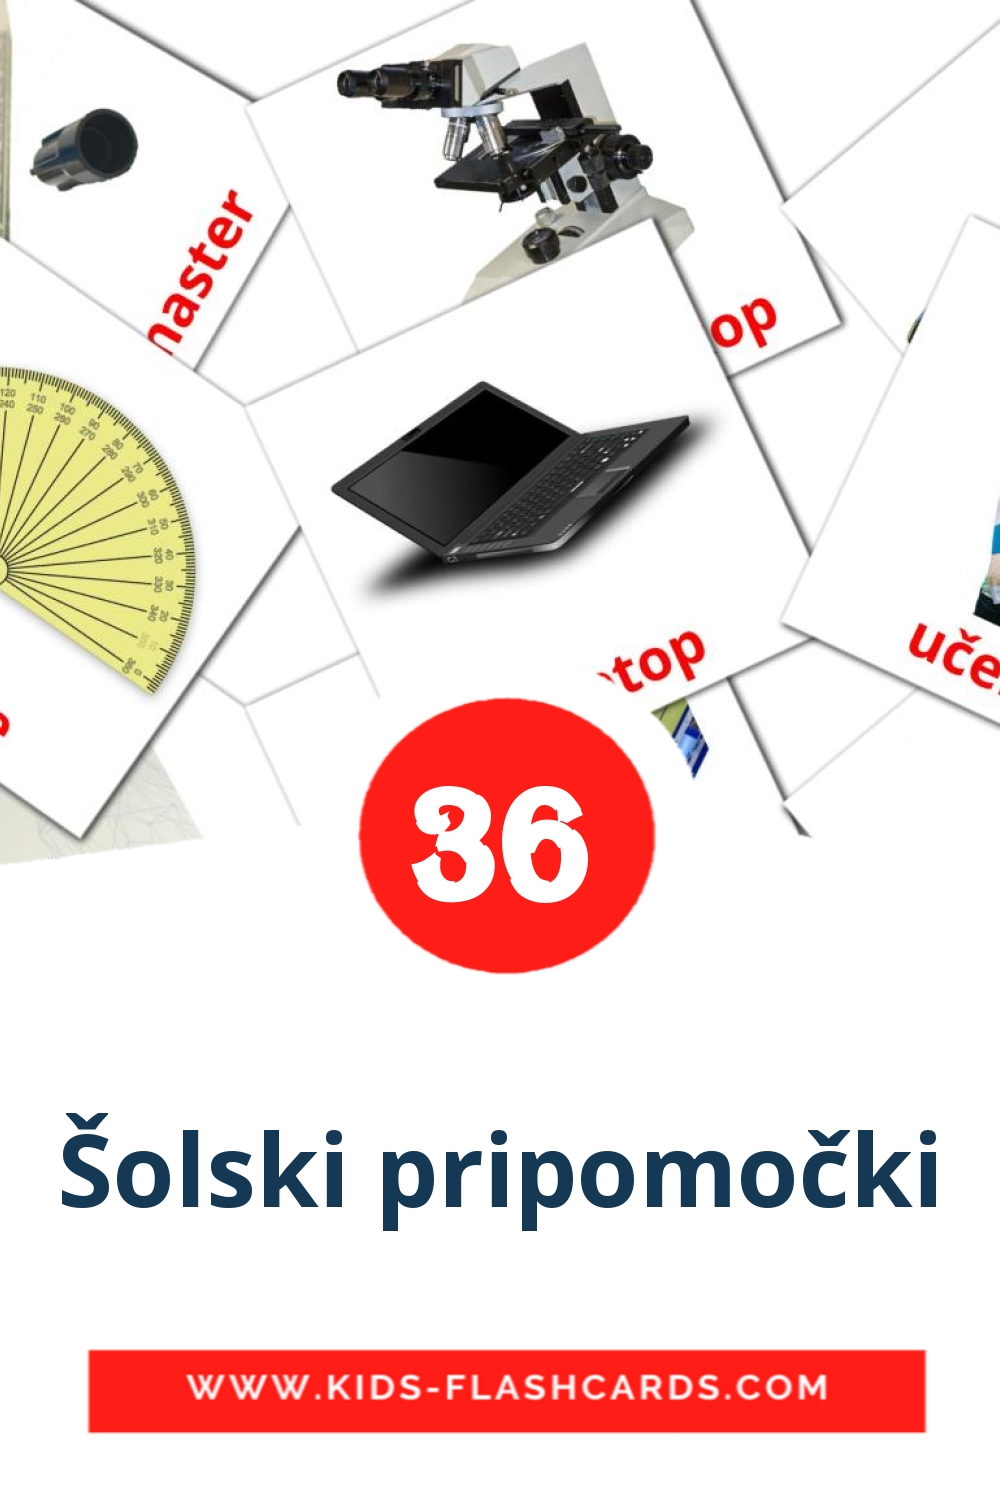 Šolski pripomočki на сербском для Детского Сада (36 карточек)